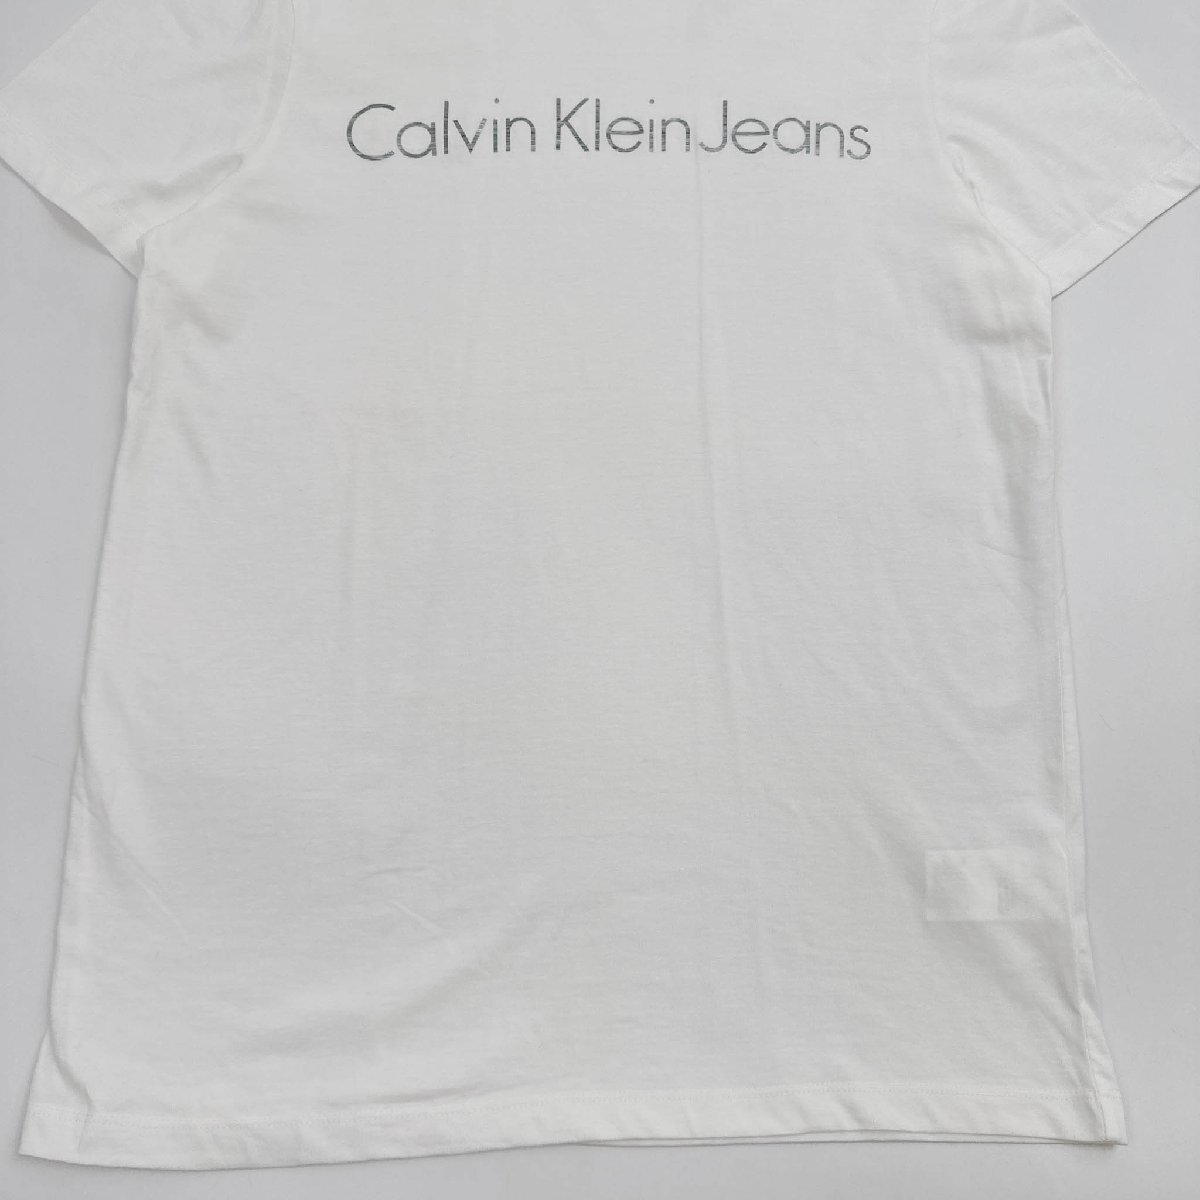 Calvin Klein Jeans カルバンクライン ジーンズ ロゴプリント 半袖Tシャツ カットソー M /白/ホワイト/メンズの画像7